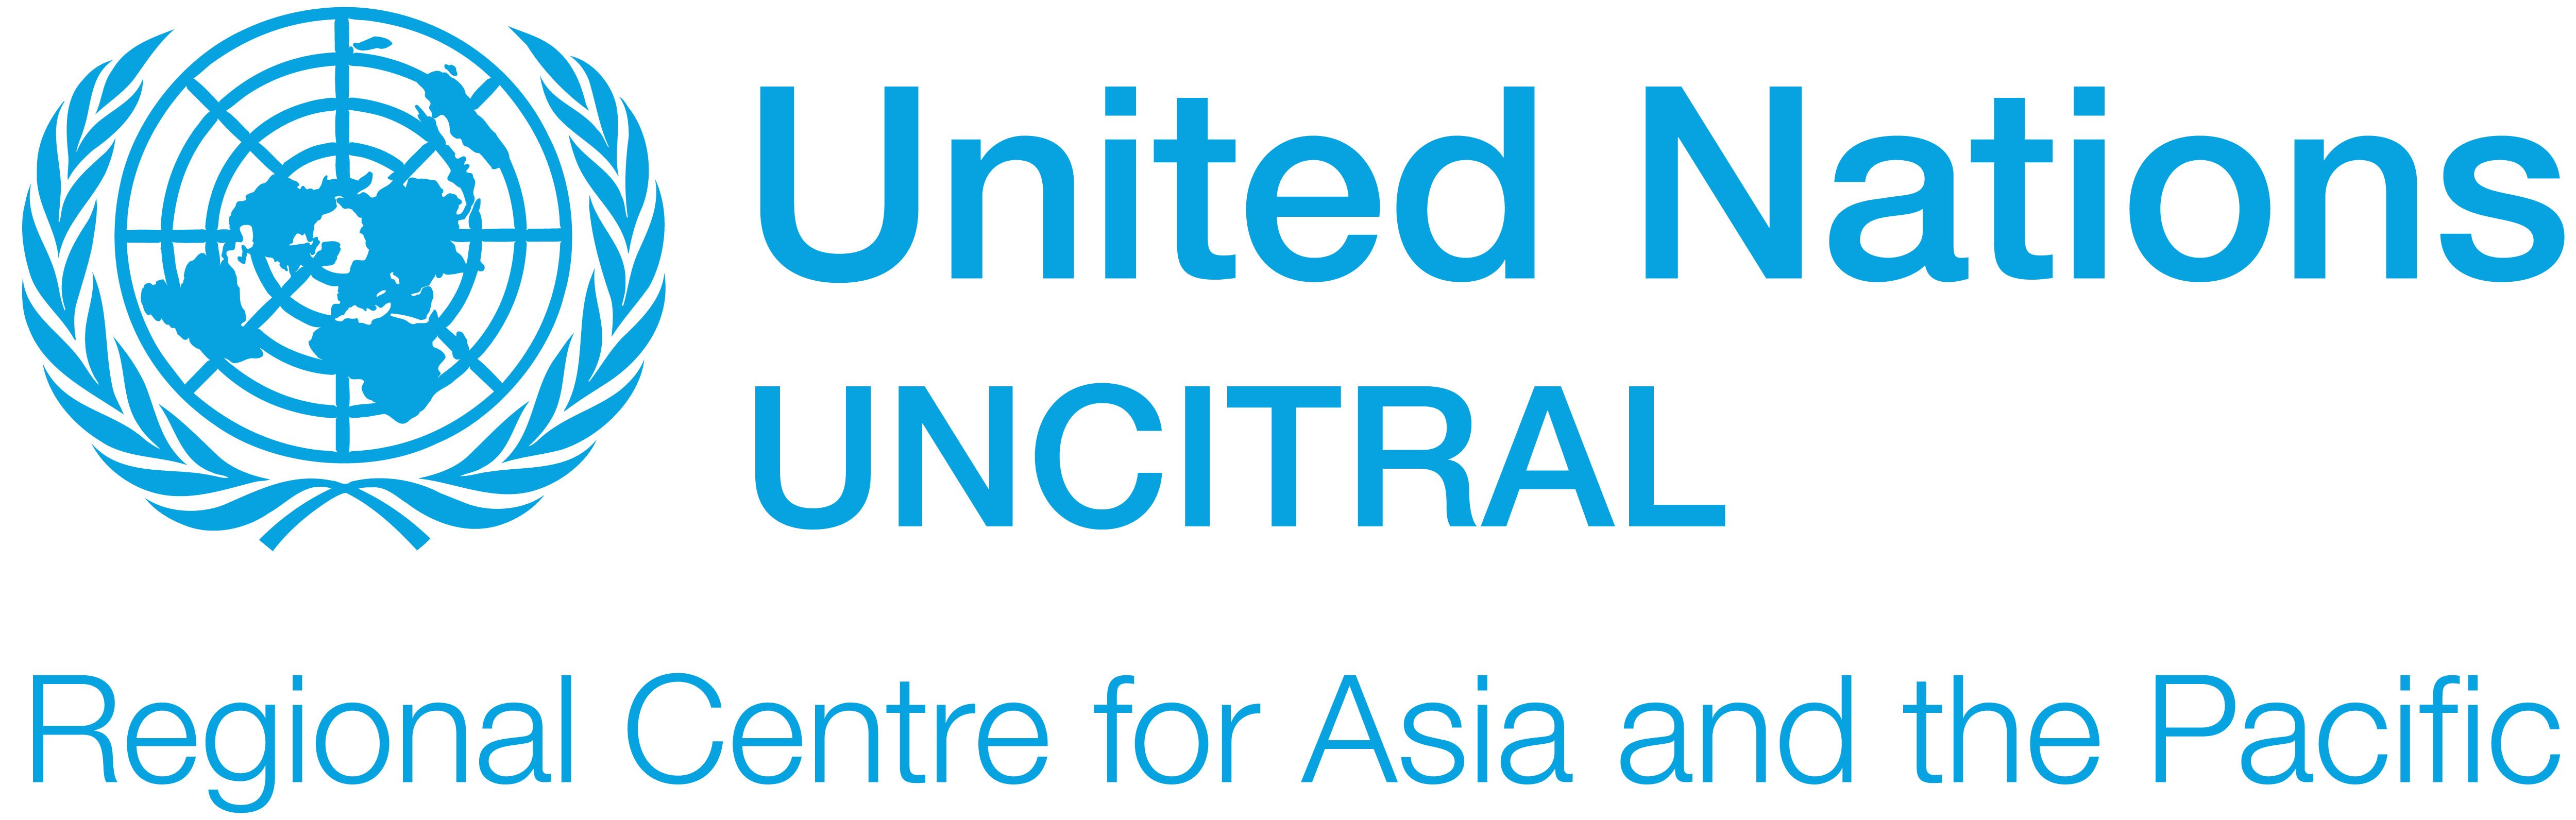 UNCITRAL_regional_logo_FINAL_blue